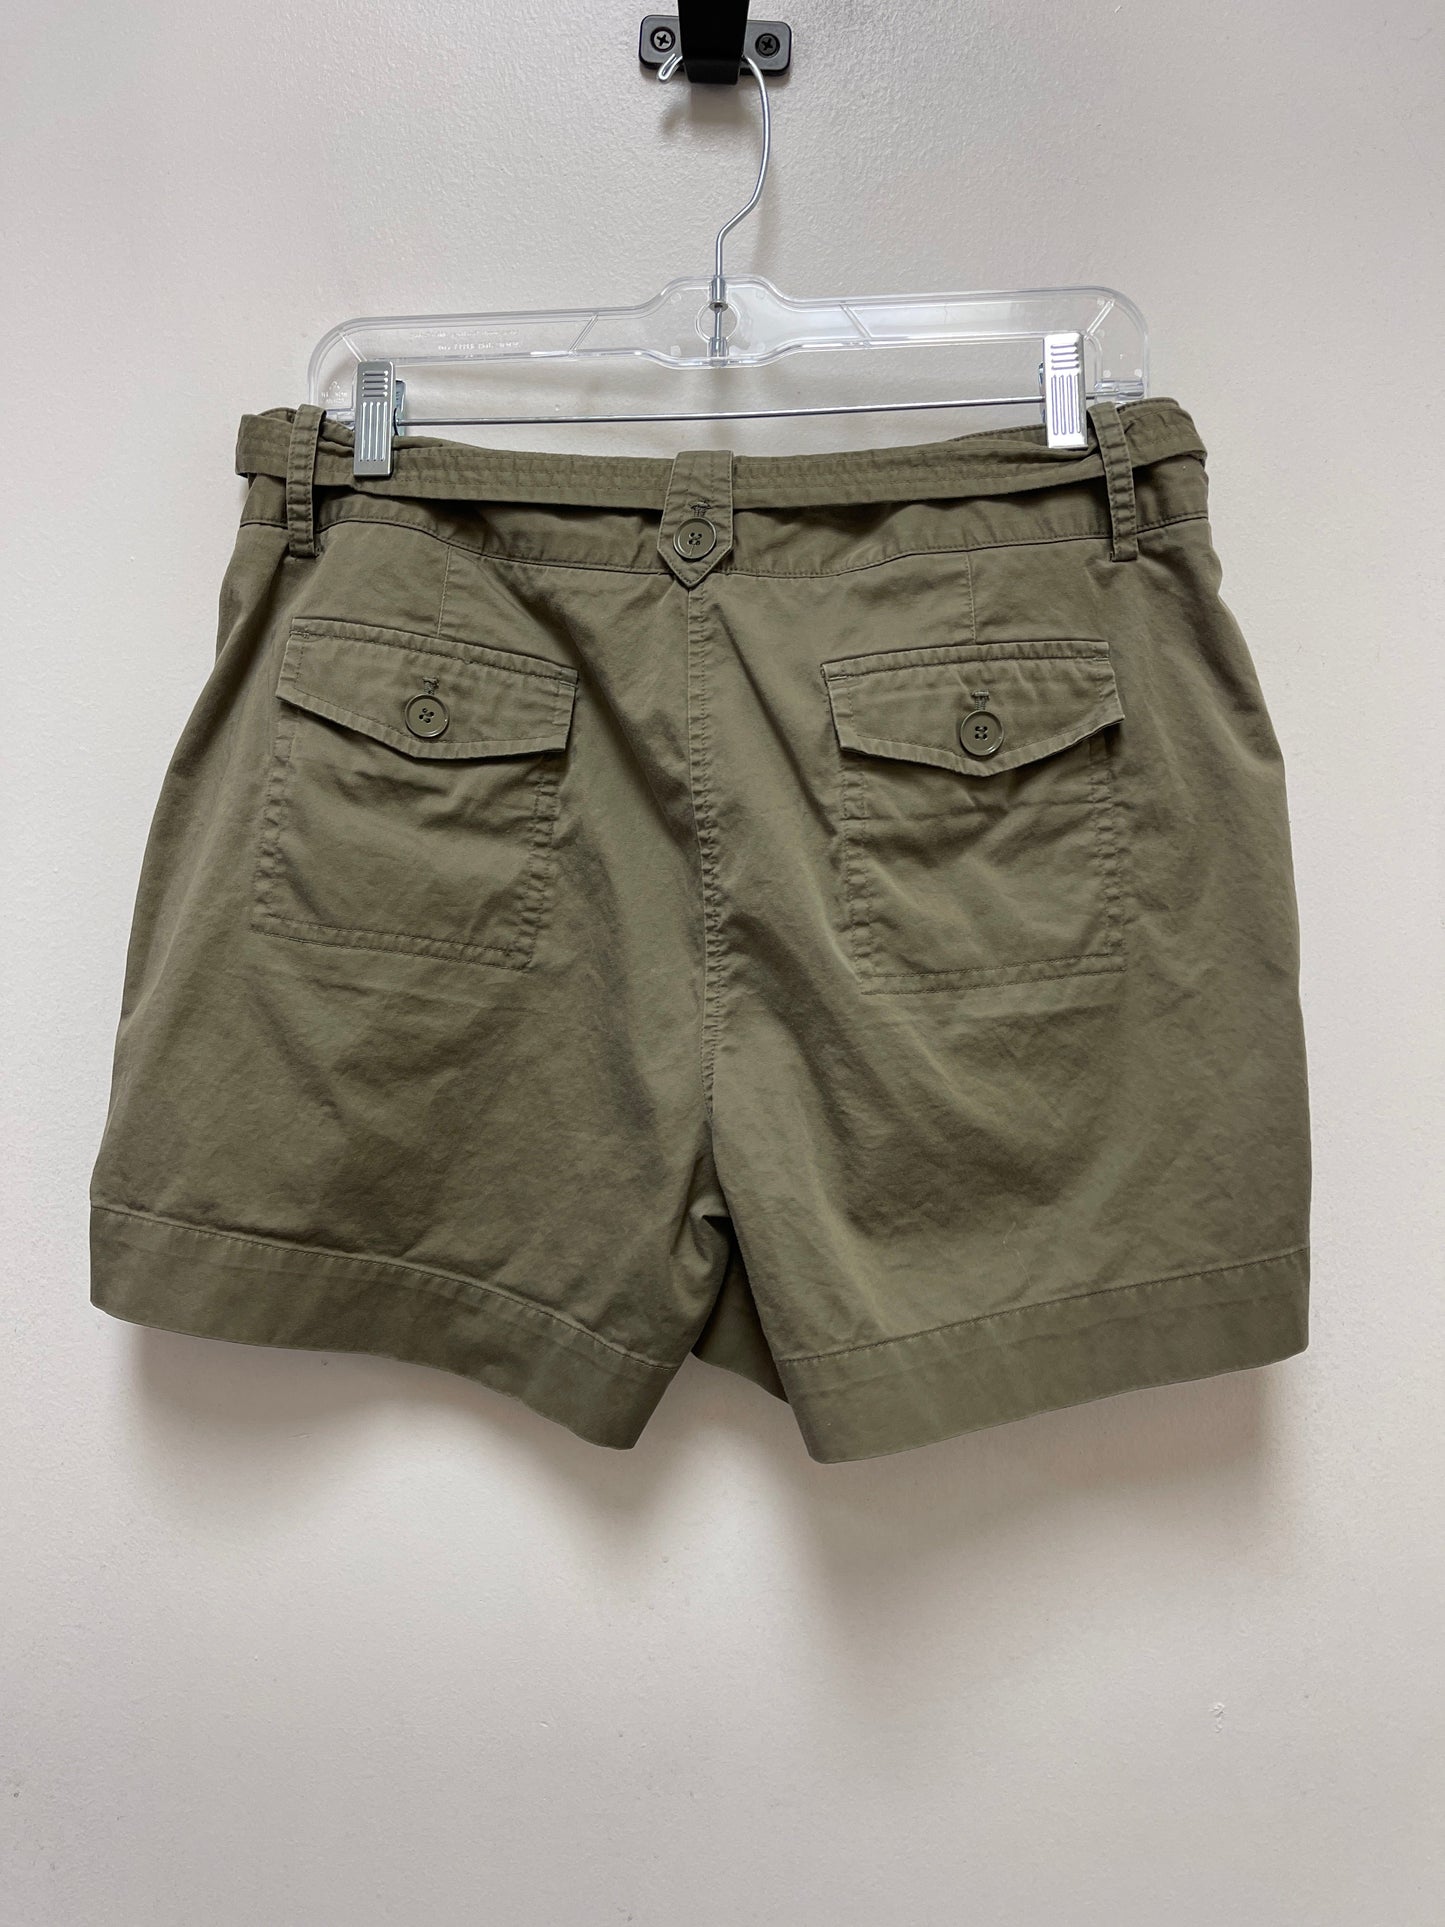 Shorts By Talbots  Size: 10